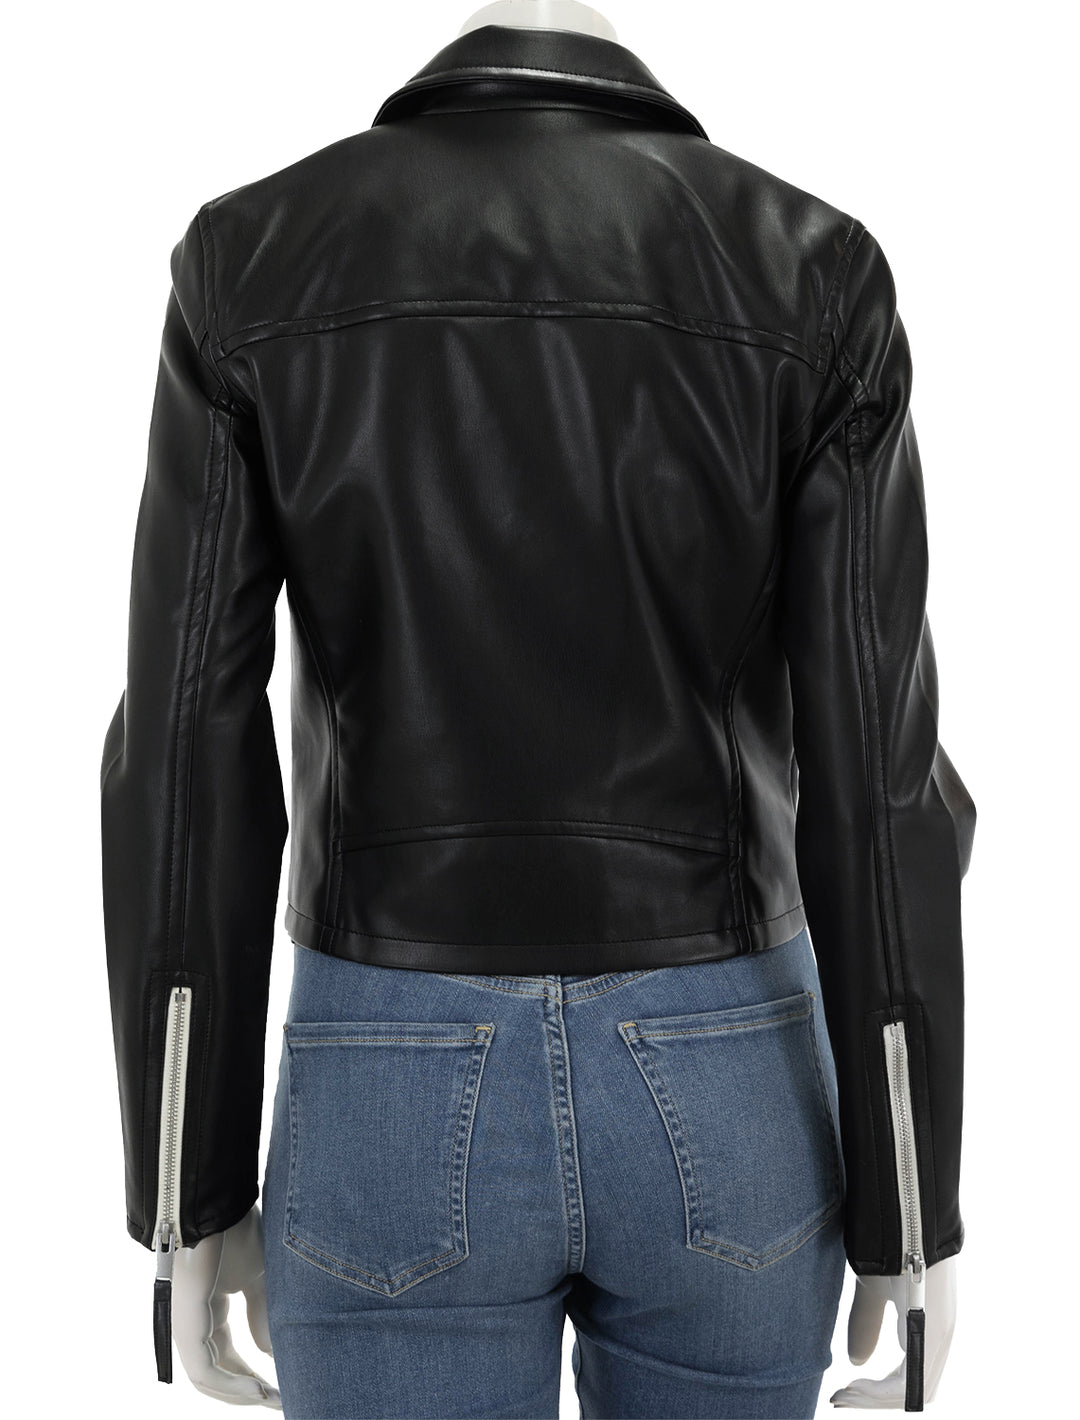 Back view of Steve Madden's vinka jacket in black.